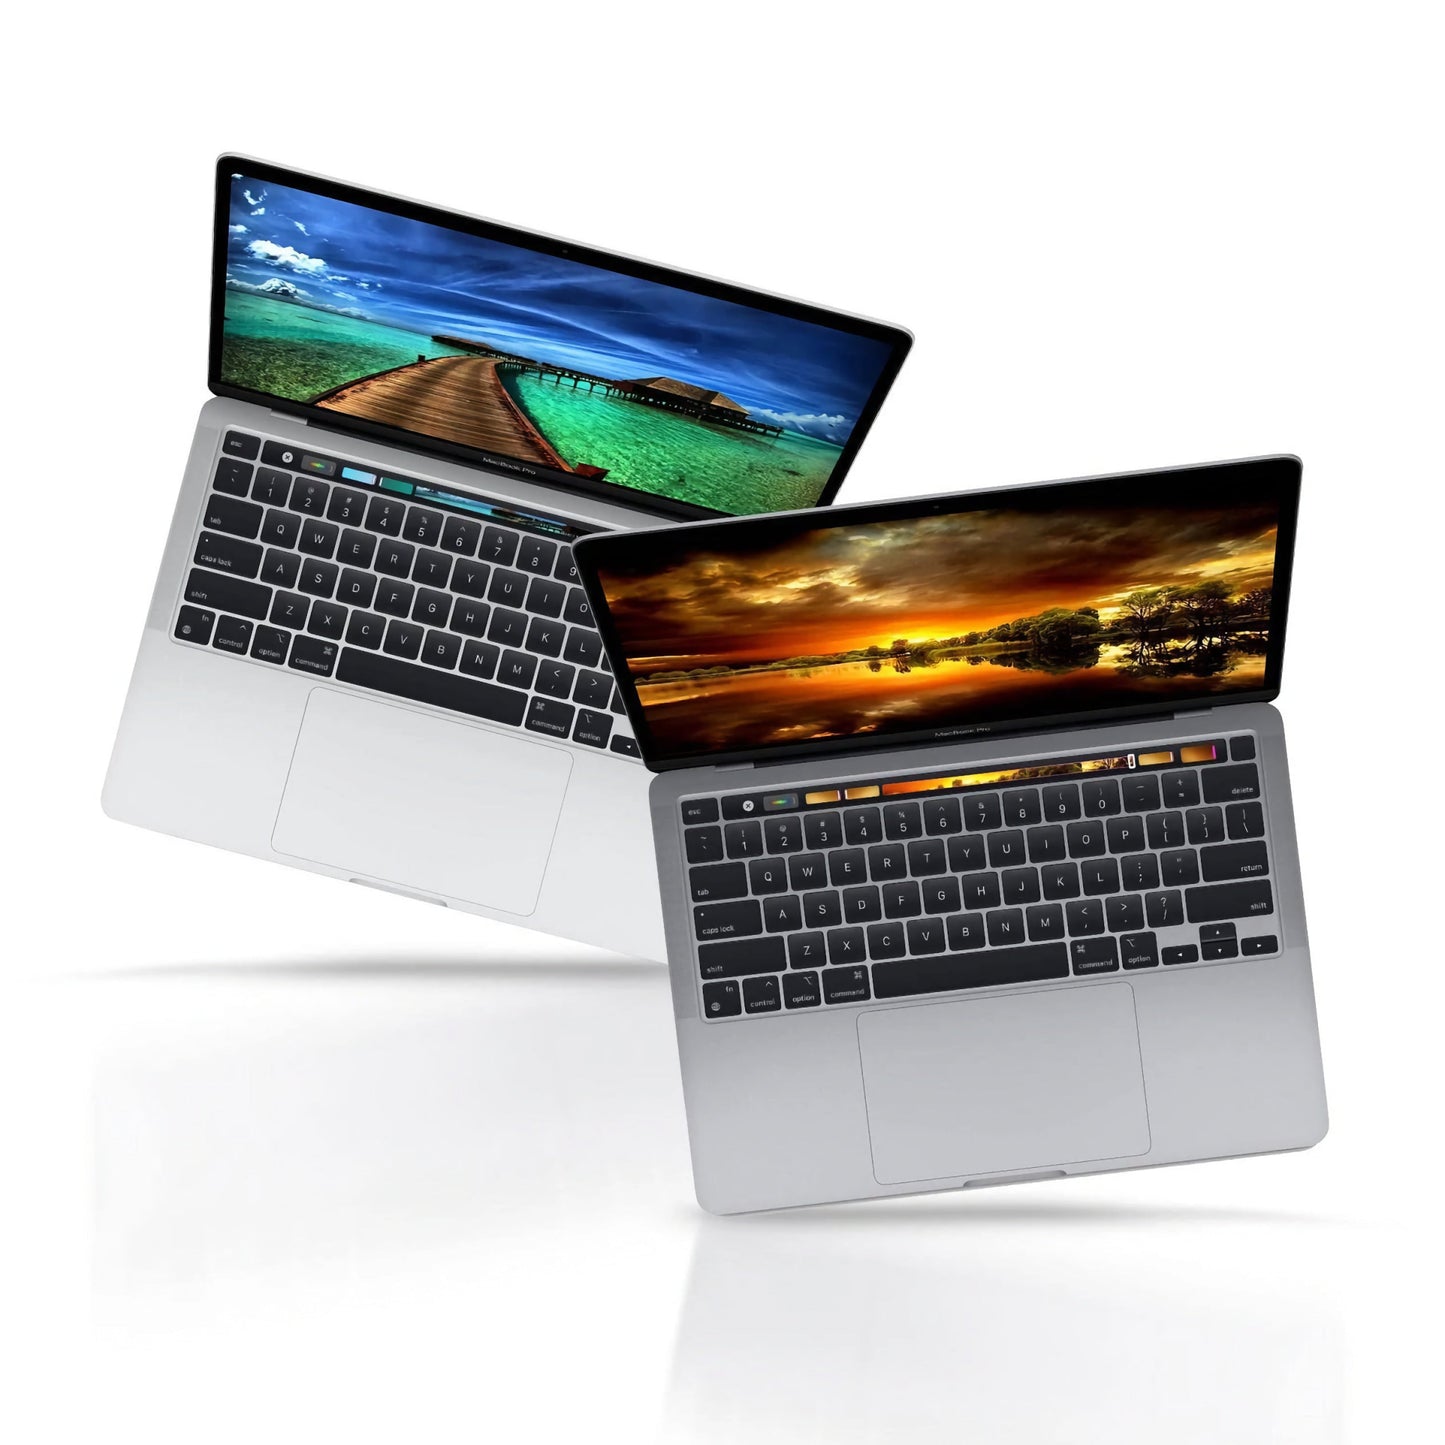 Apple - Apple MacBook Pro (13-inch) – Apple M1 Chip (2020) - Excellent -Space Gray -256GB SSD Storage | 8GB Memory - Maxandfix -